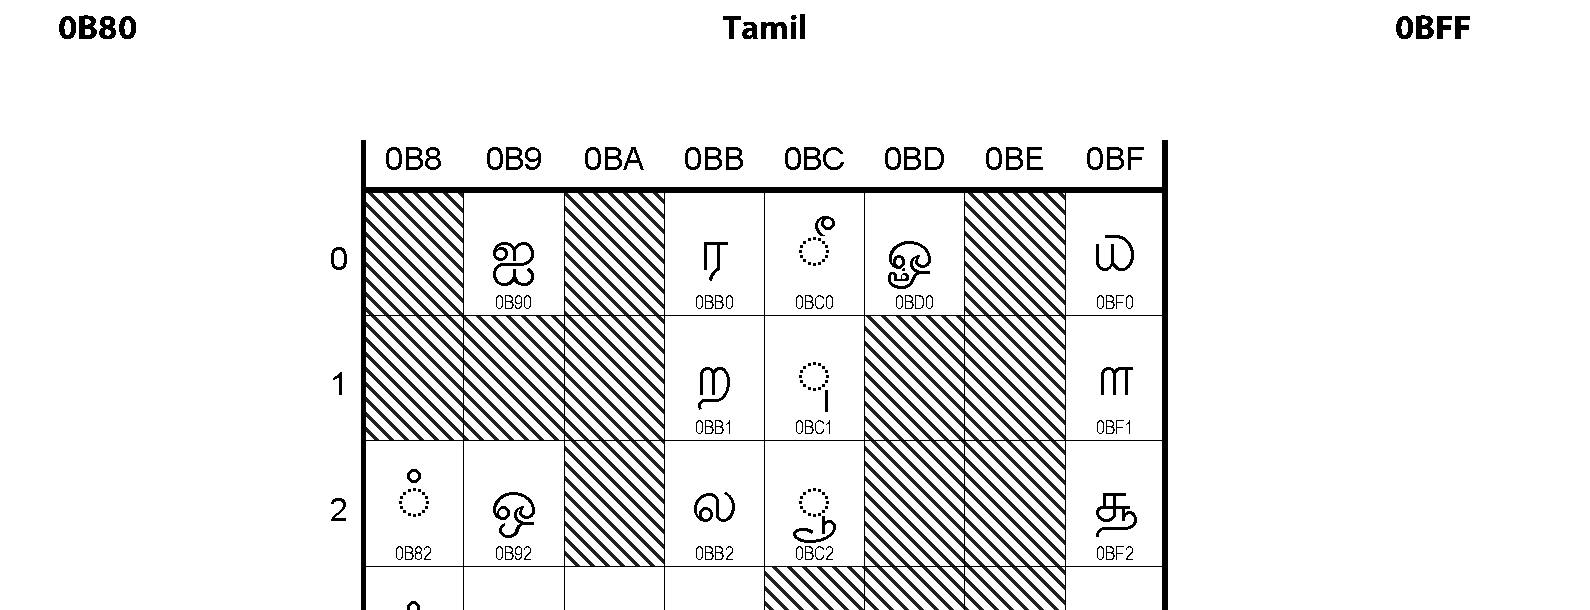 Unicode - Tamil